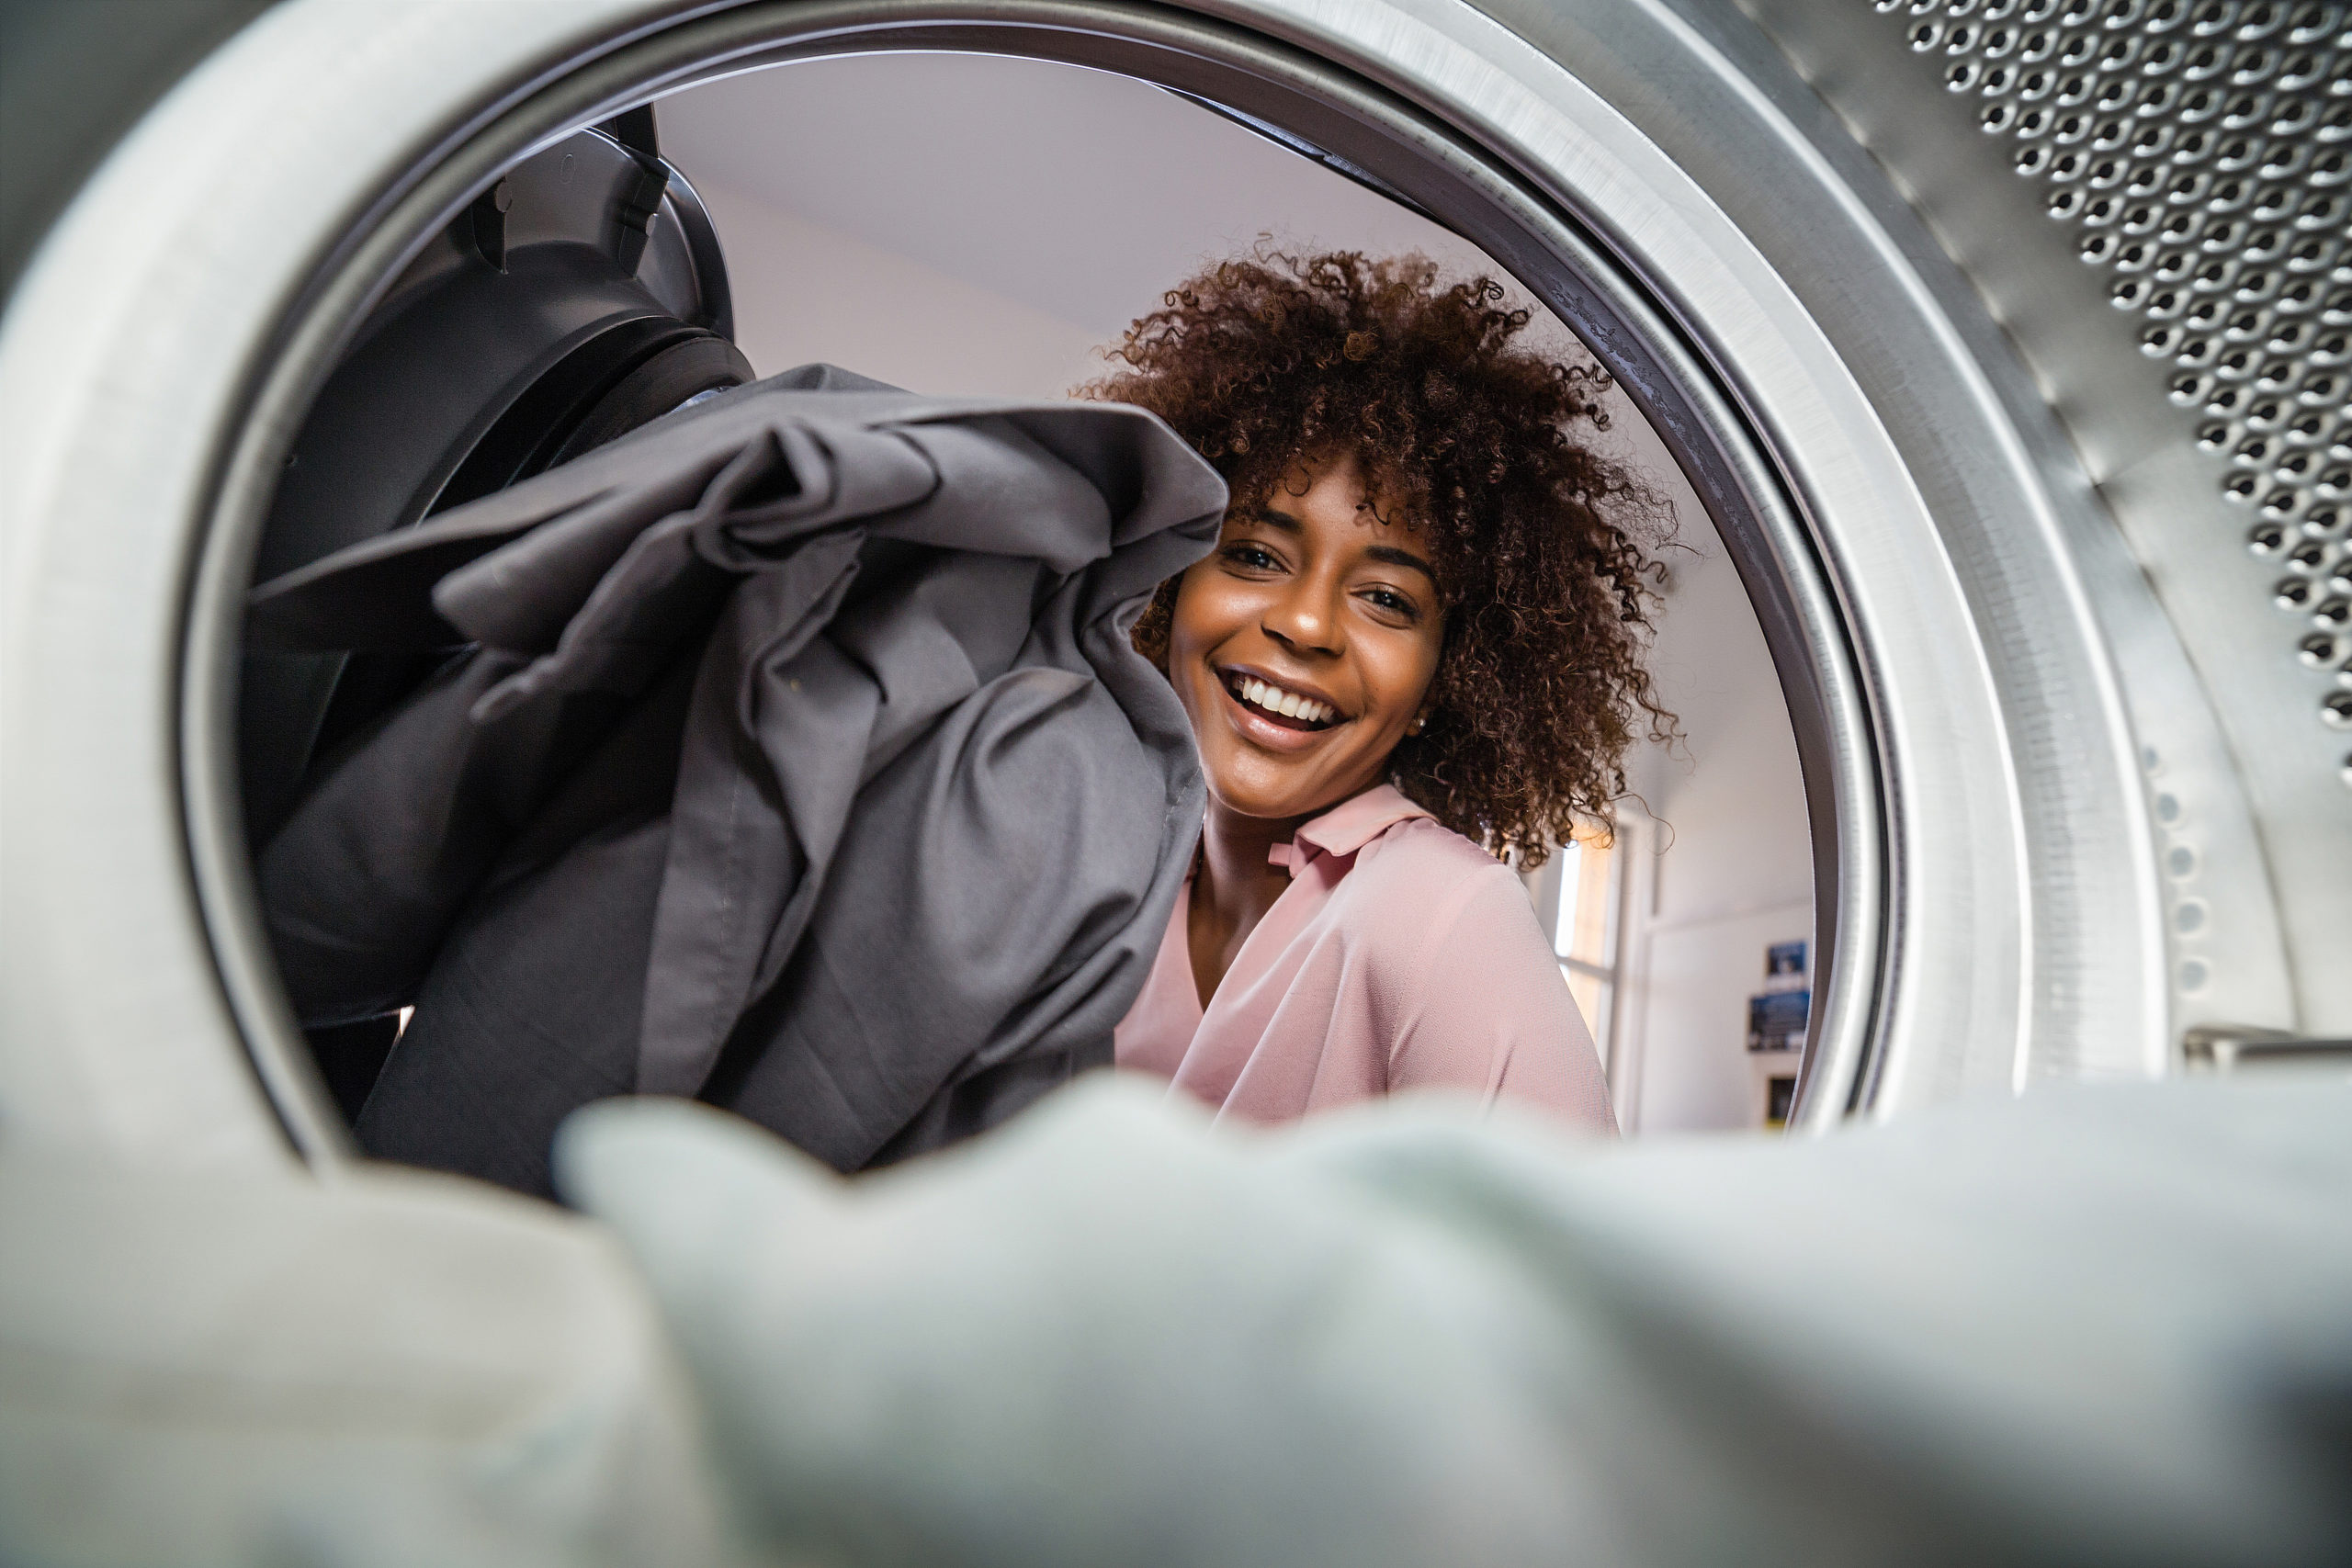 woman loads laundry machines at a free dry laundromat